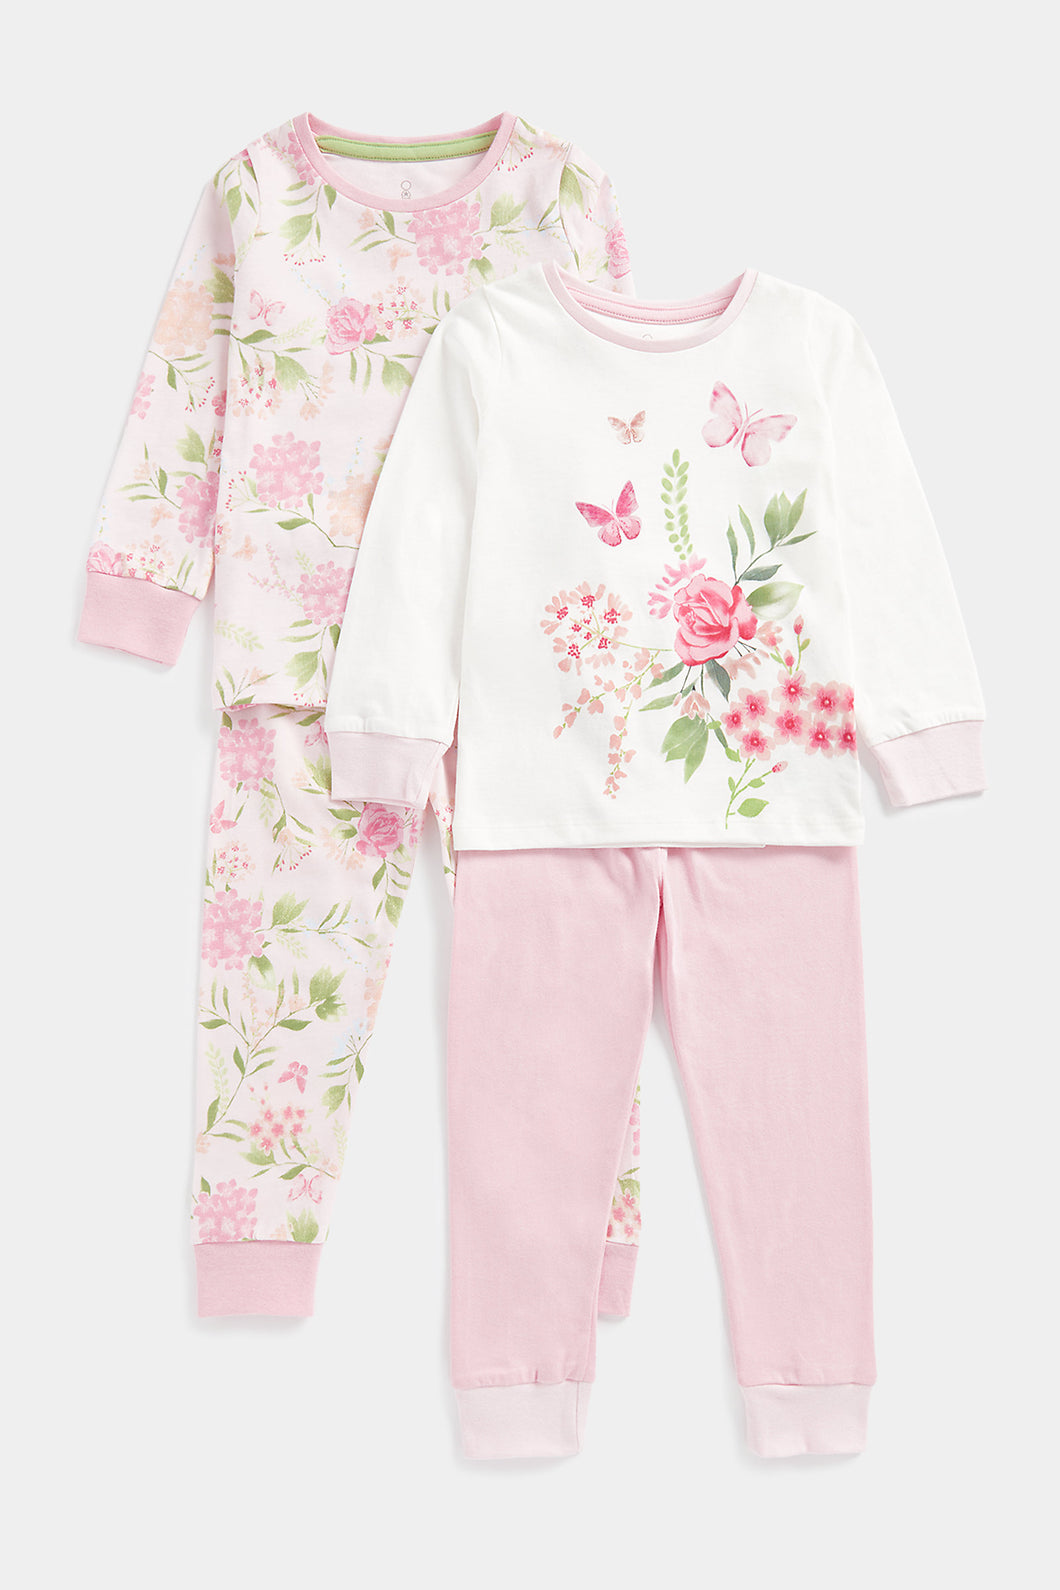 Mothercare Vintage Floral Pyjamas - 2 Pack